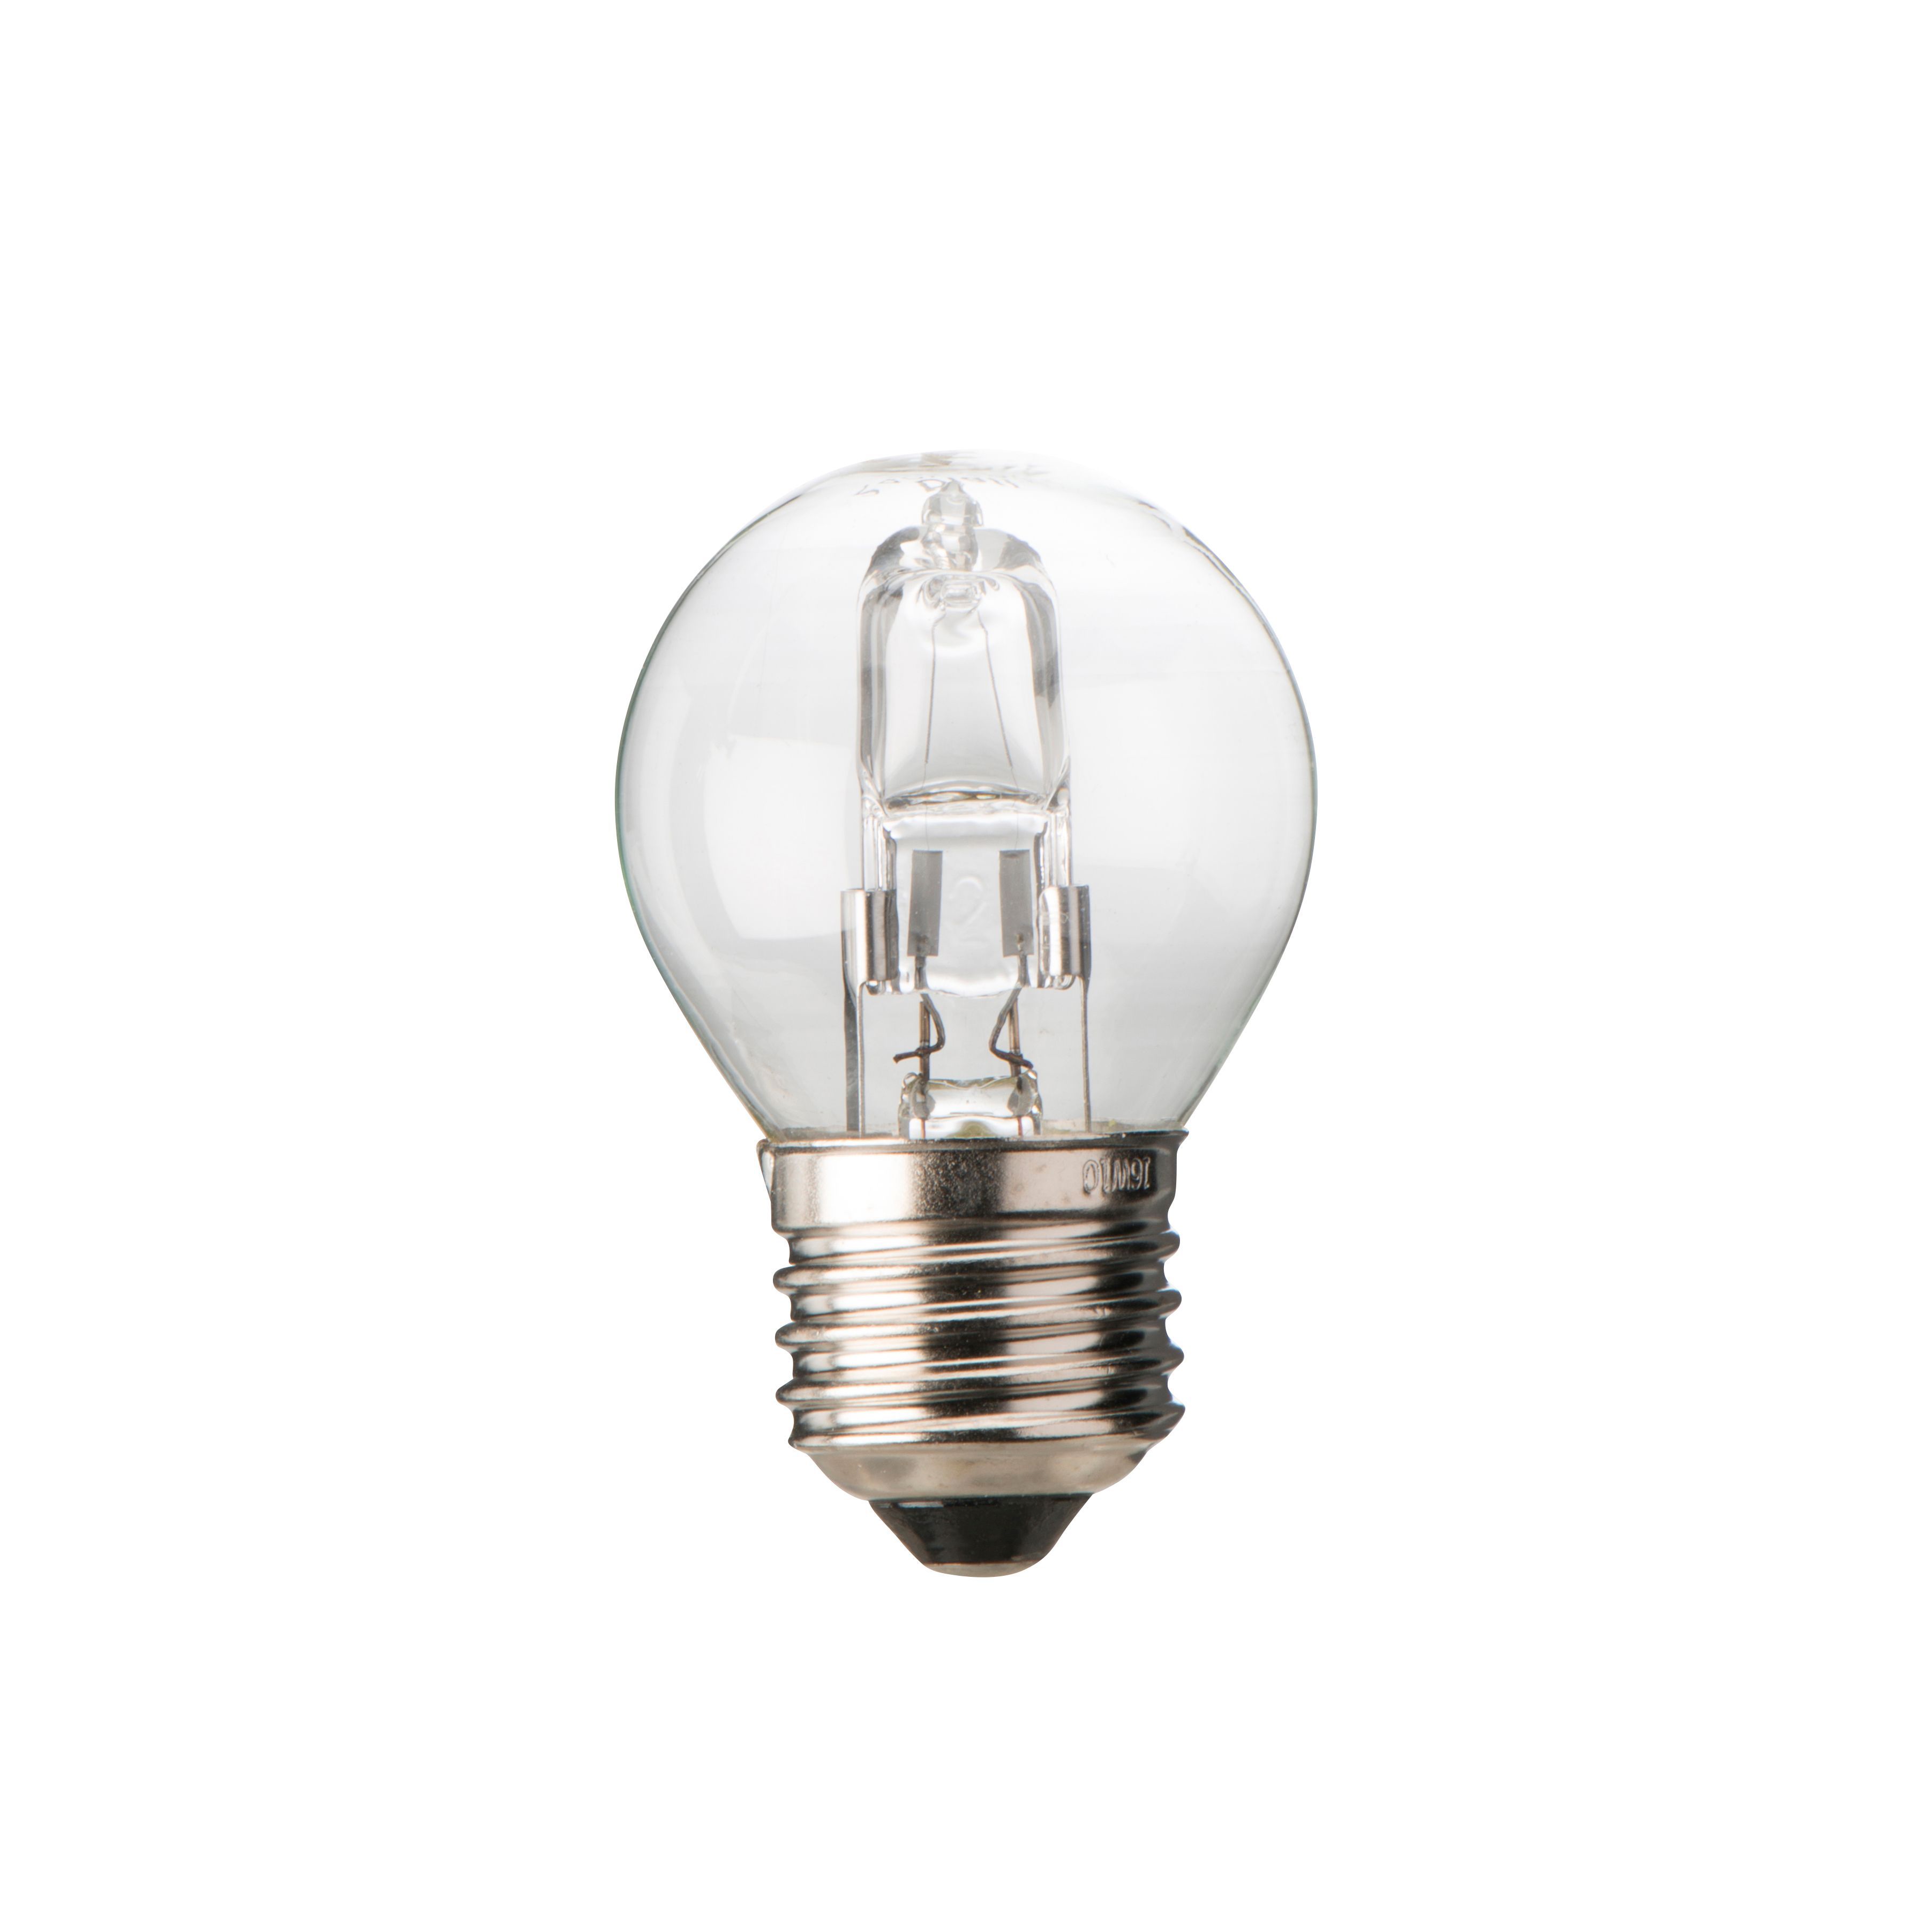 Diall E27 19W Mini globe Halogen Dimmable Light bulb, Pack of 3